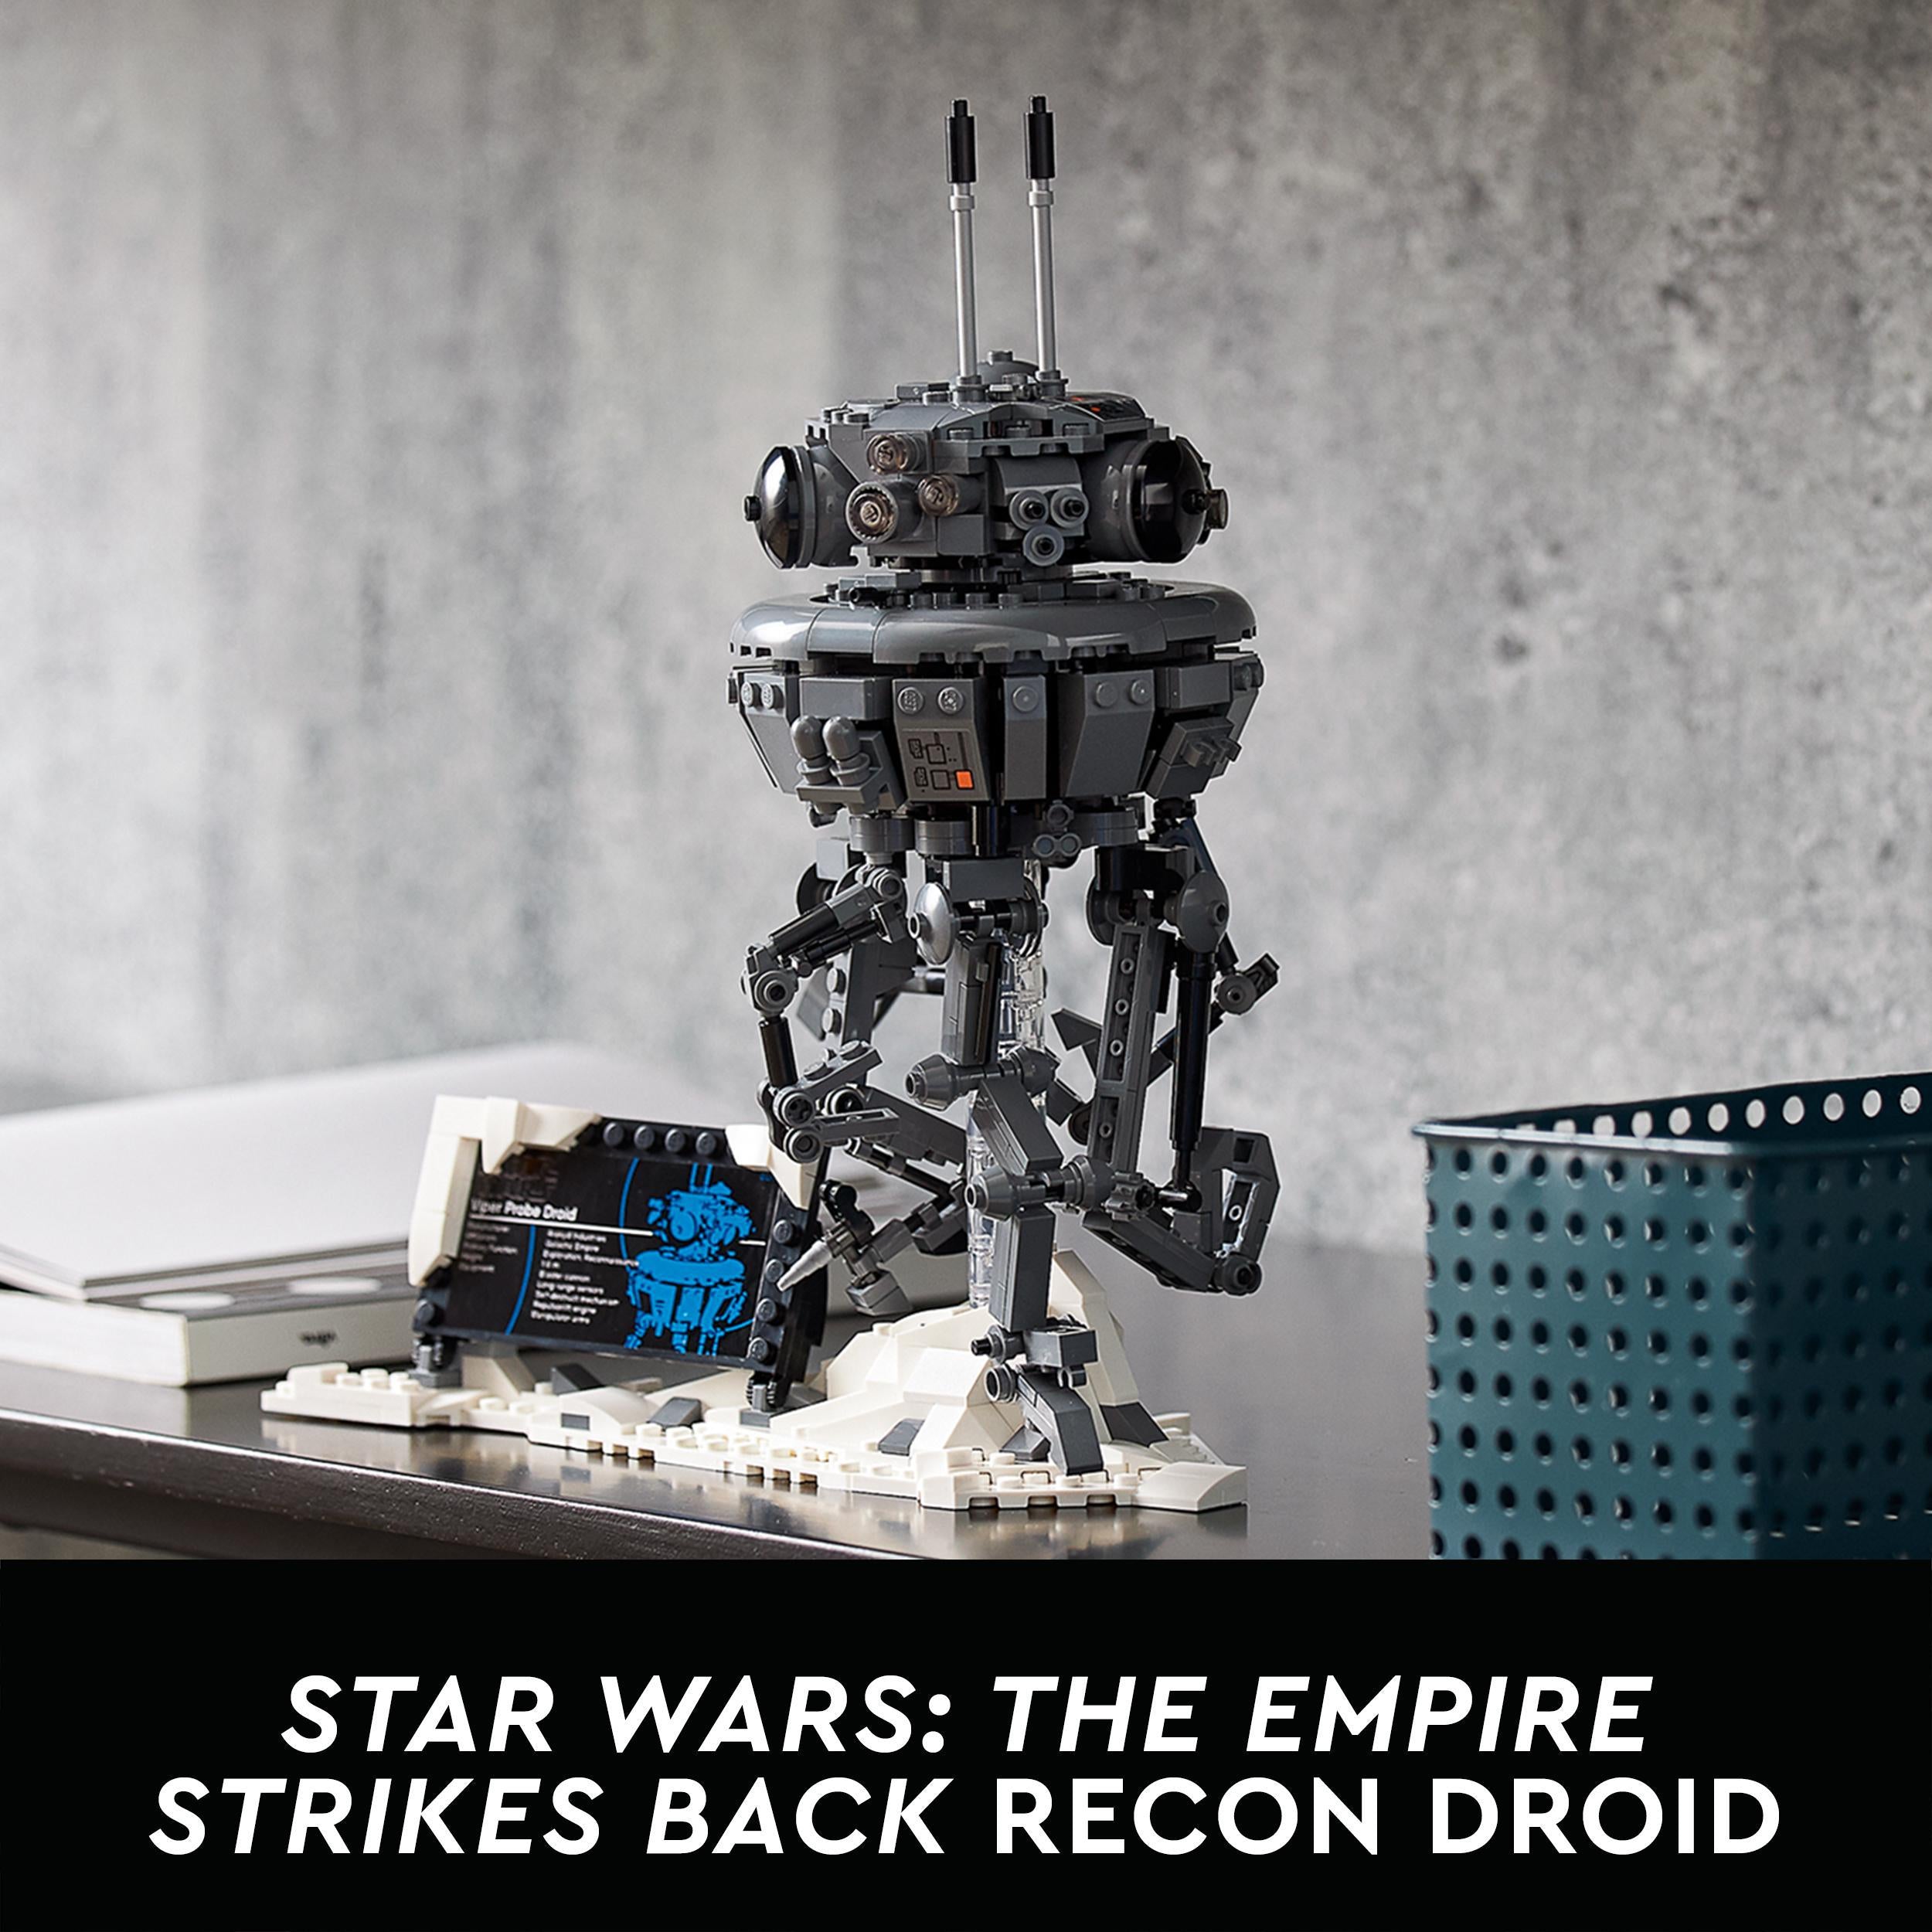 LEGO® Star Wars Imperial Probe Droid Adult Set 75306 Default Title